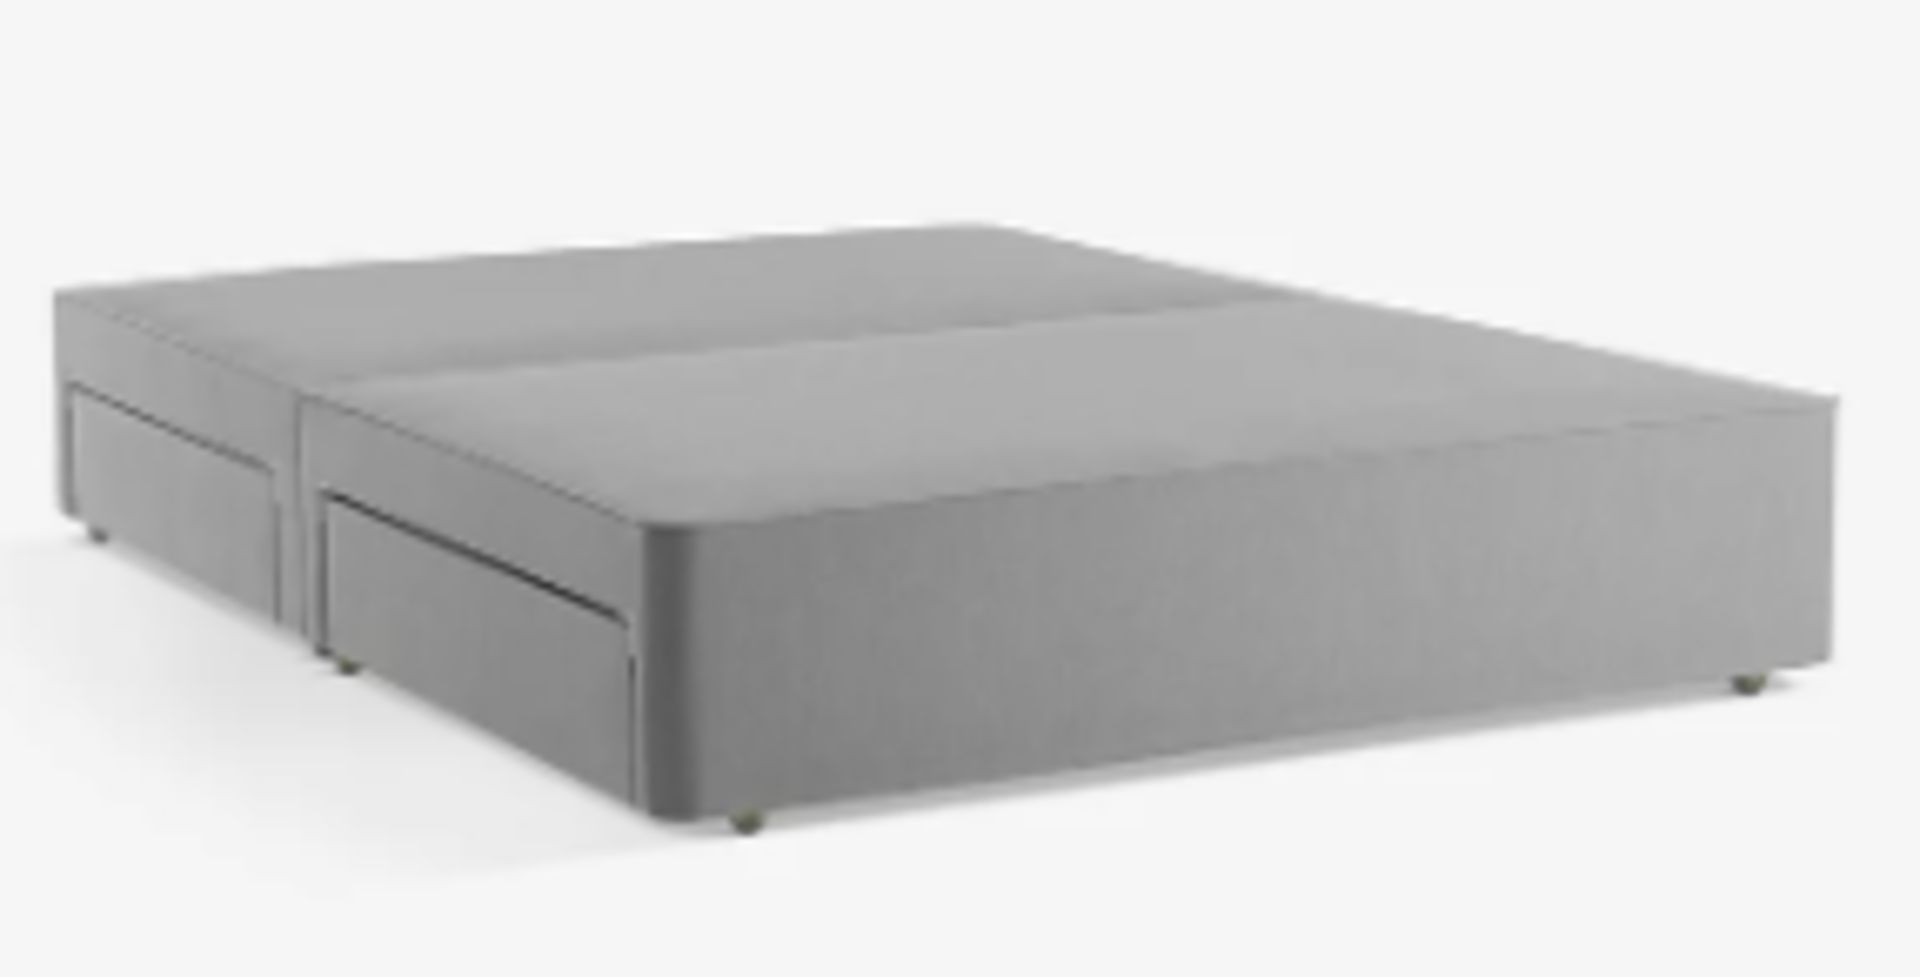 Item Description - John Lewis & Partners Pocket Sprung 2500 4 Drawer Storage, Double Base, -...